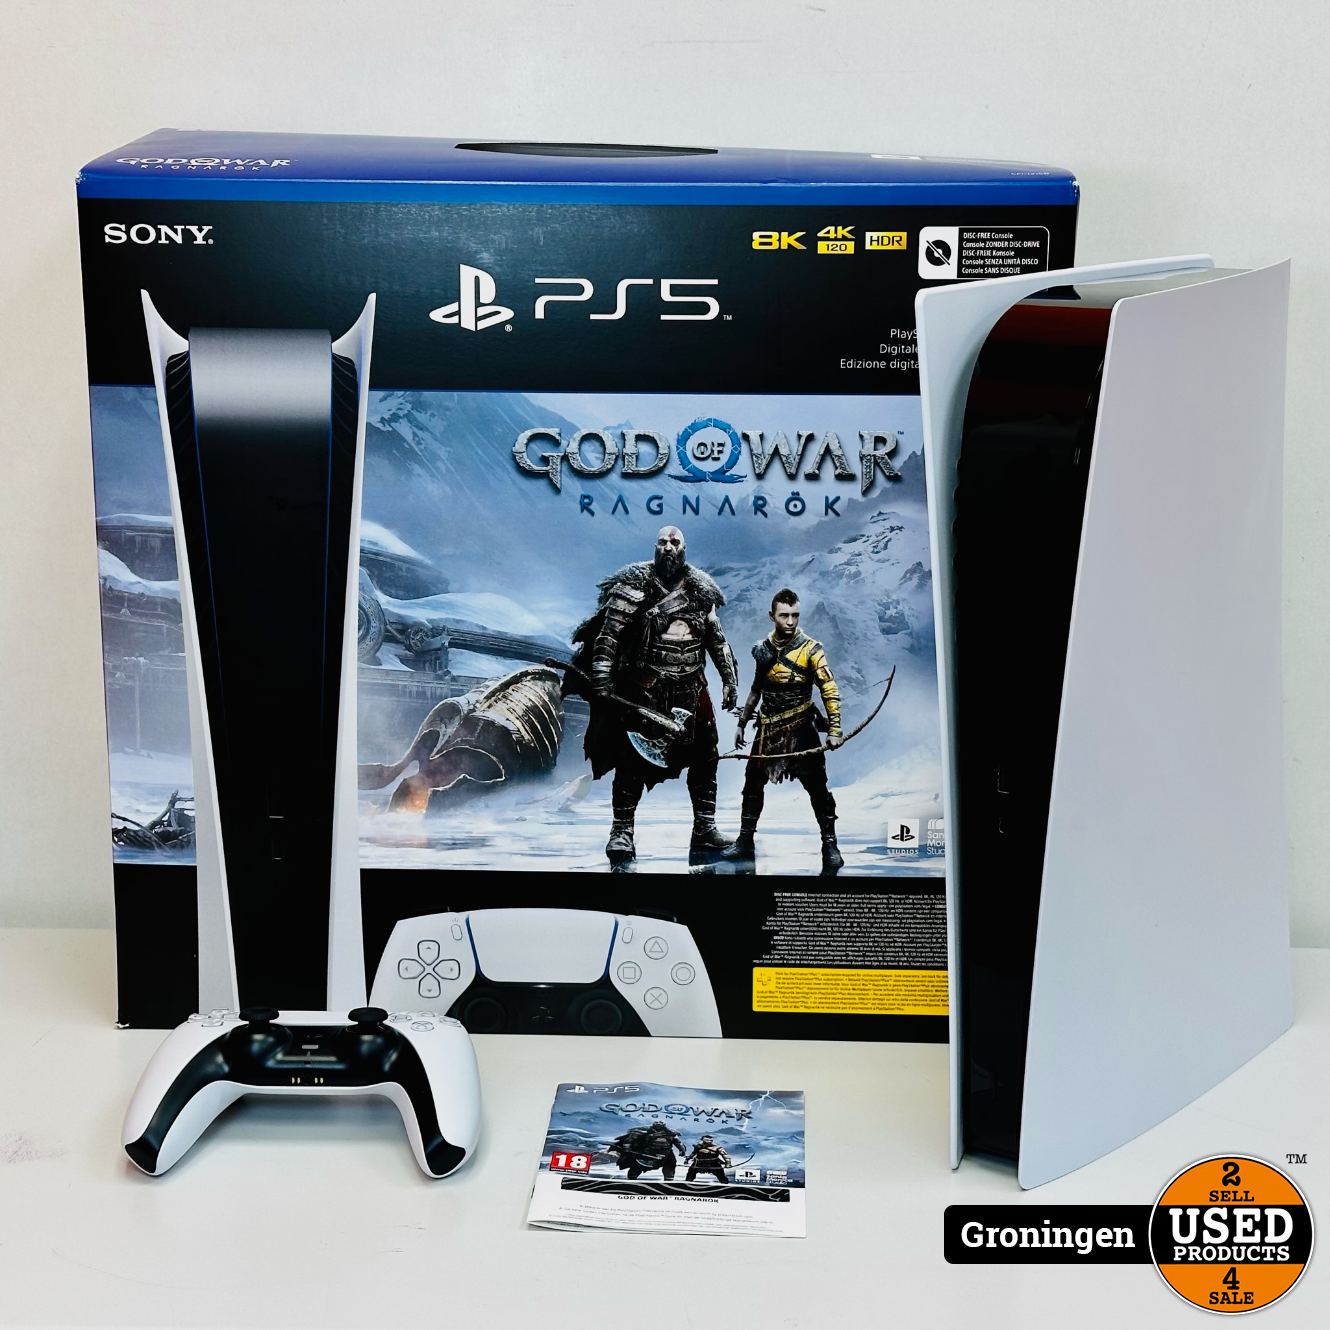 PS5] Sony PlayStation 5 Digital God of War Ragnarok Bundle | NETTE STAAT! COMPLEET IN DOOS - Used Products Groningen